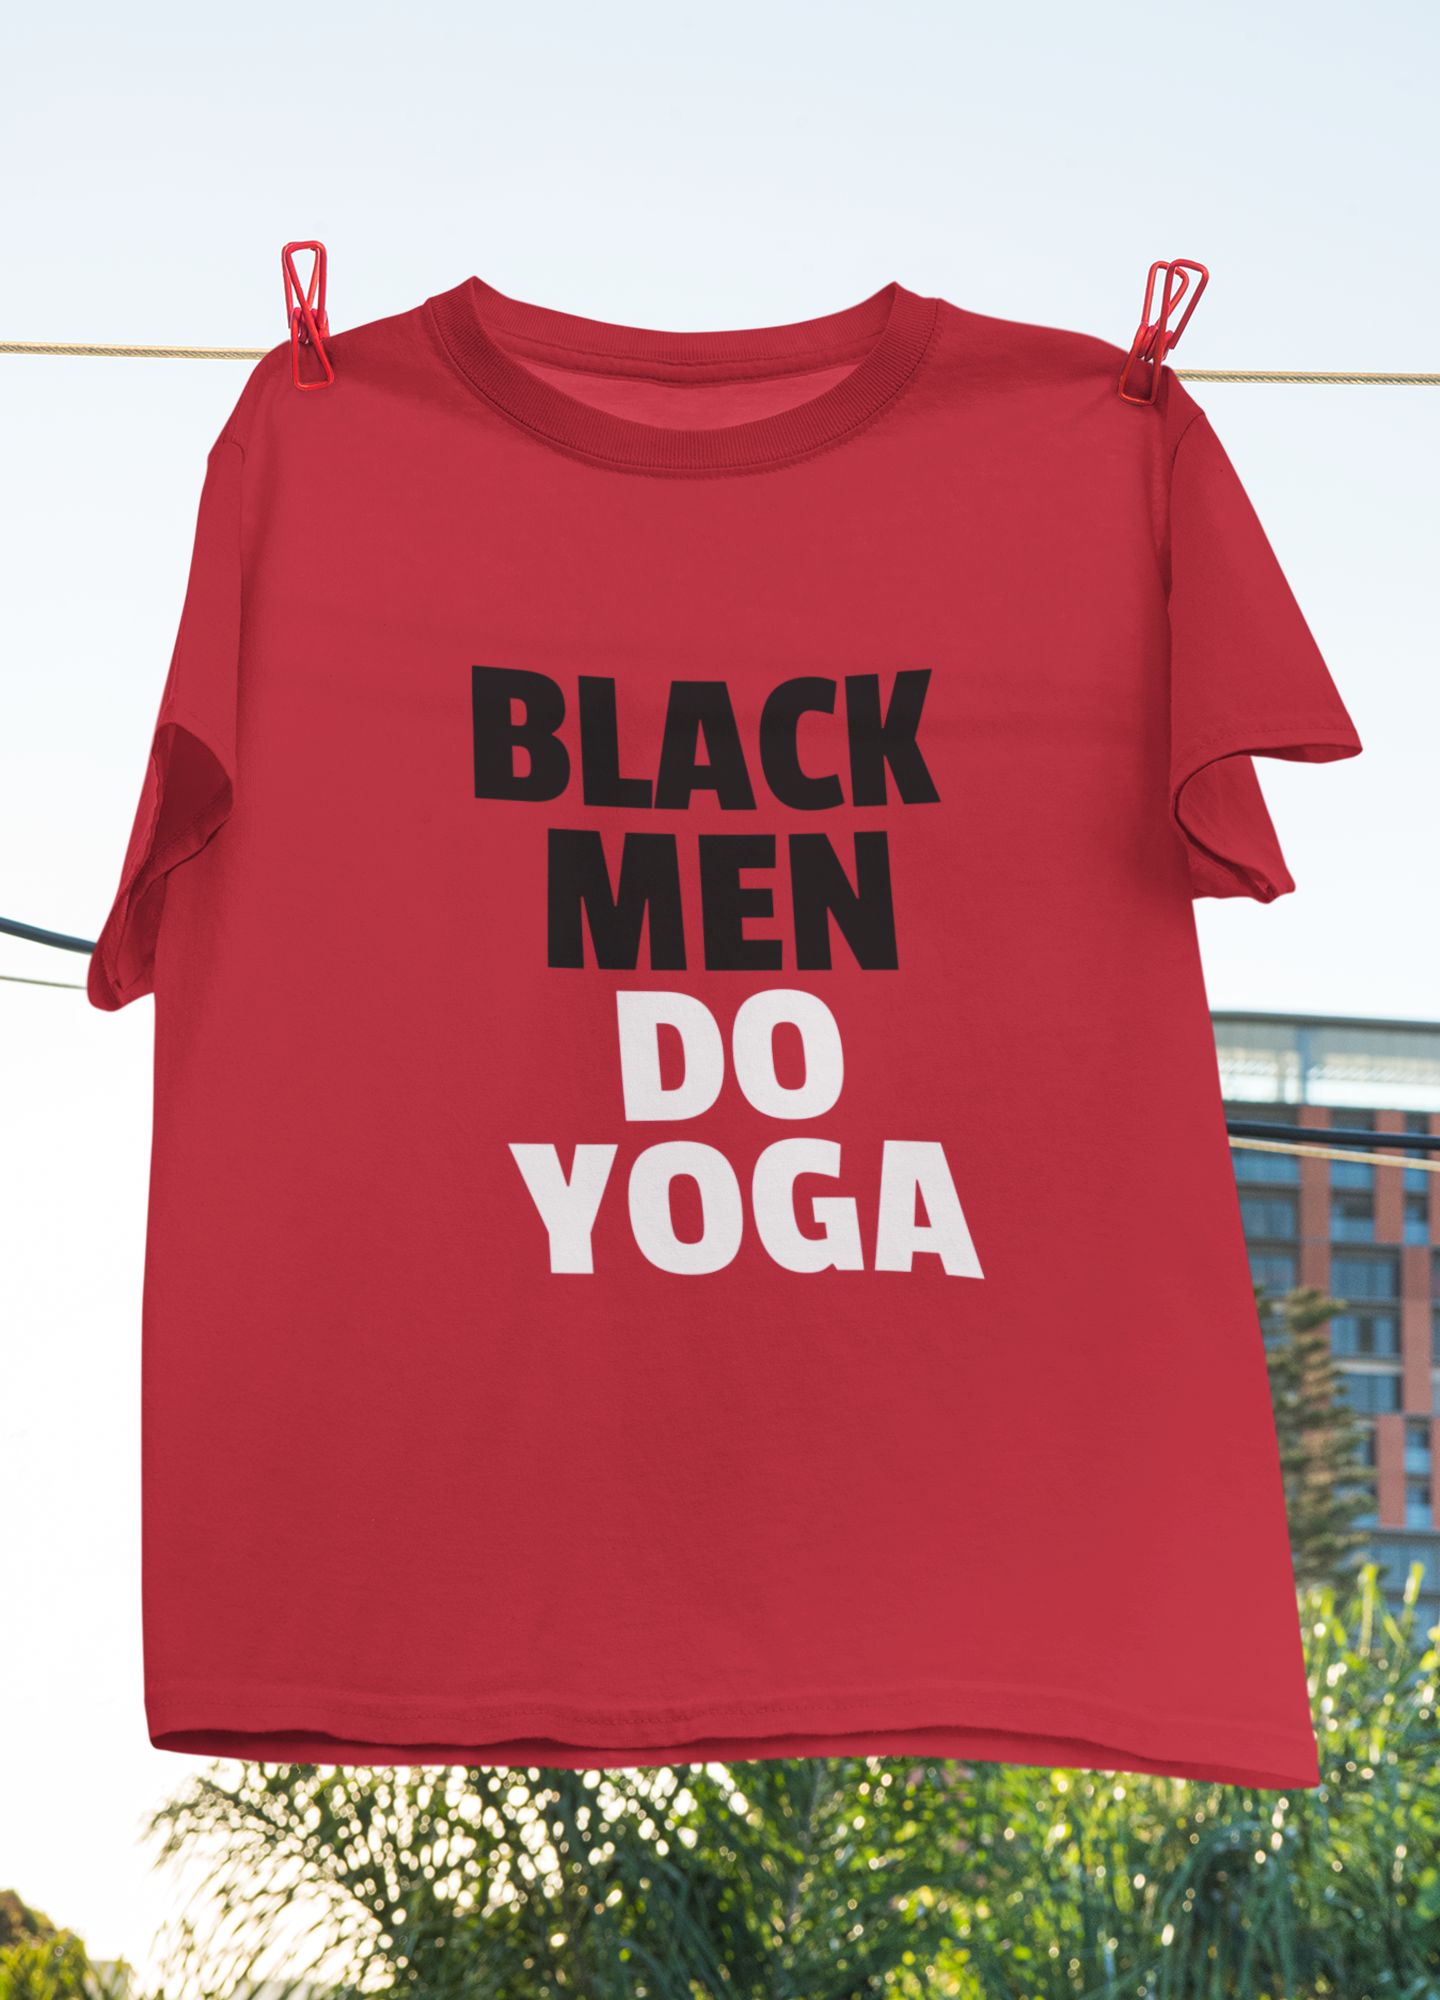 The Black Men Do Yoga Tee